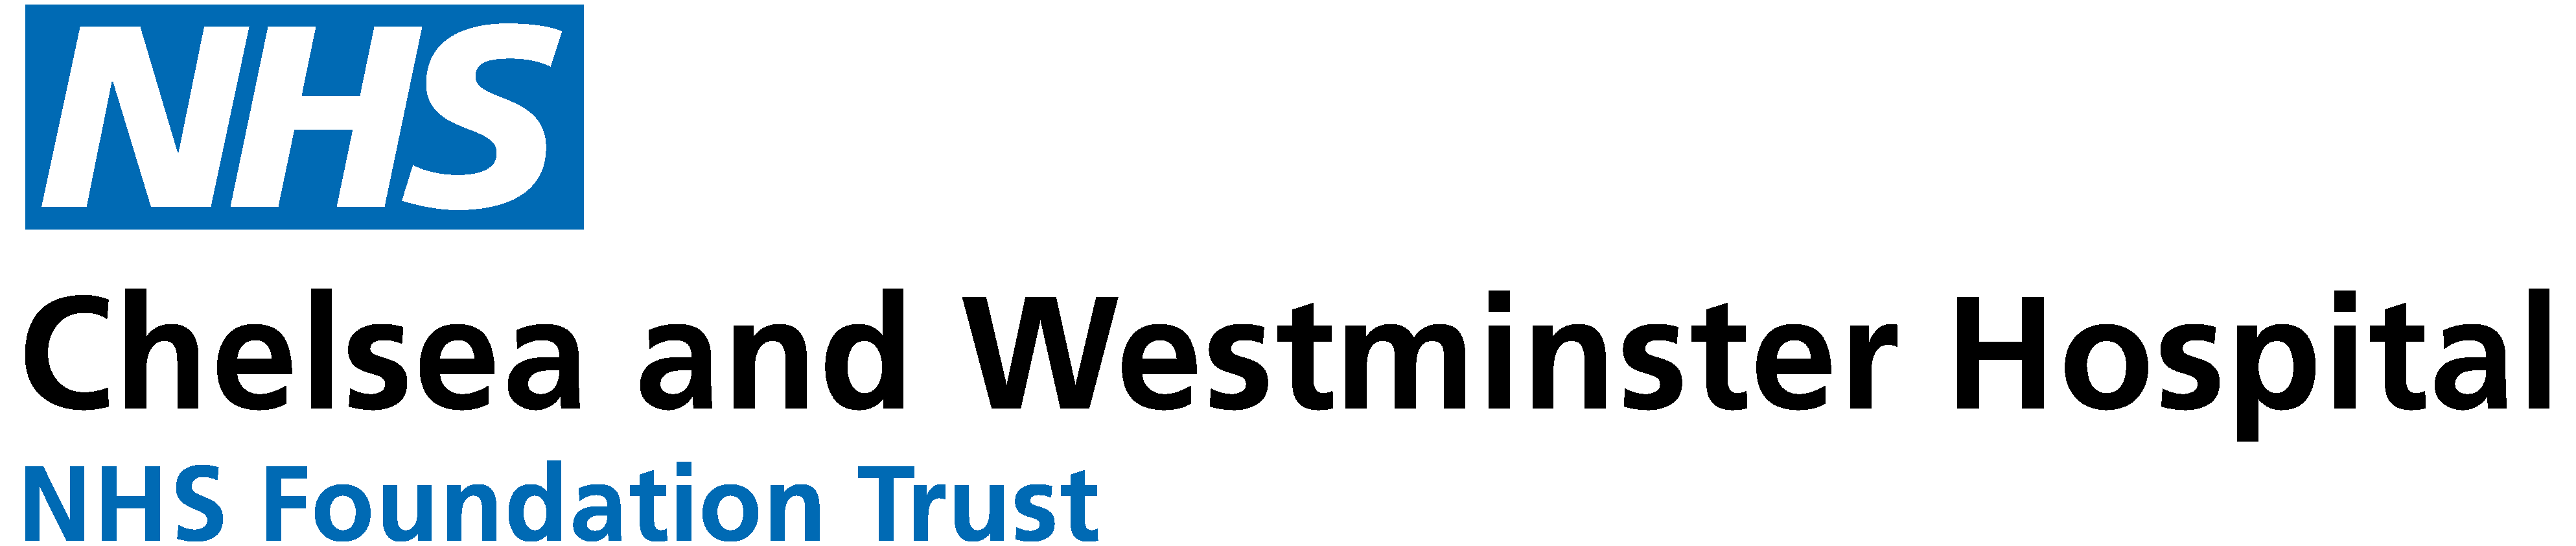 Westminster Logo - CW logo left — Chelsea and Westminster Hospital NHS Foundation Trust